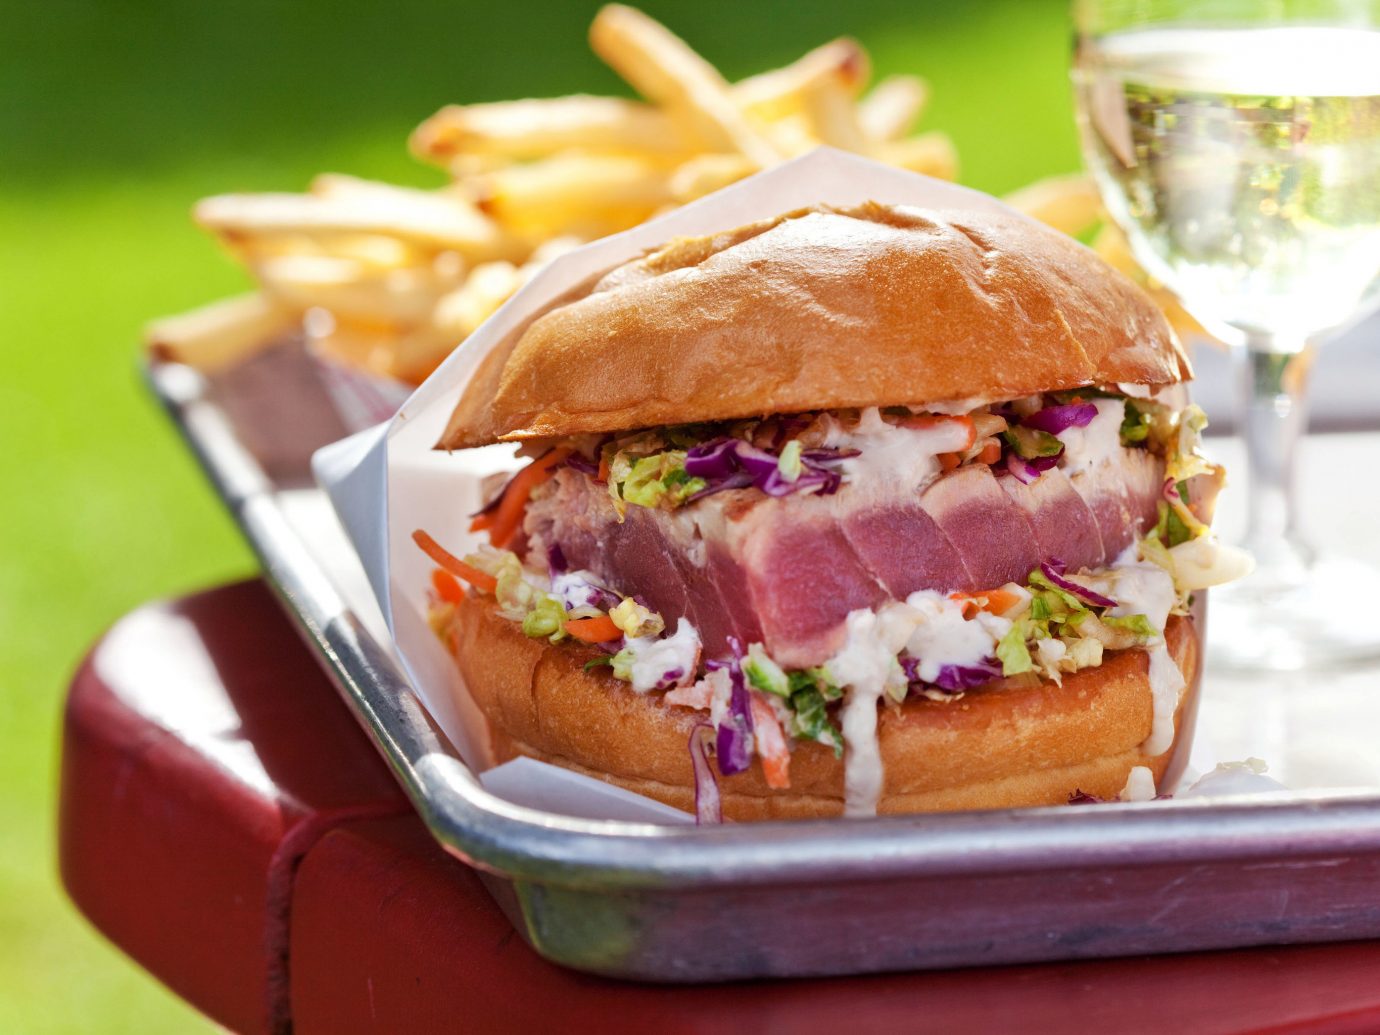 Food + Drink food dish sandwich snack food hamburger meat slider produce meal lunch cuisine breakfast fast food close